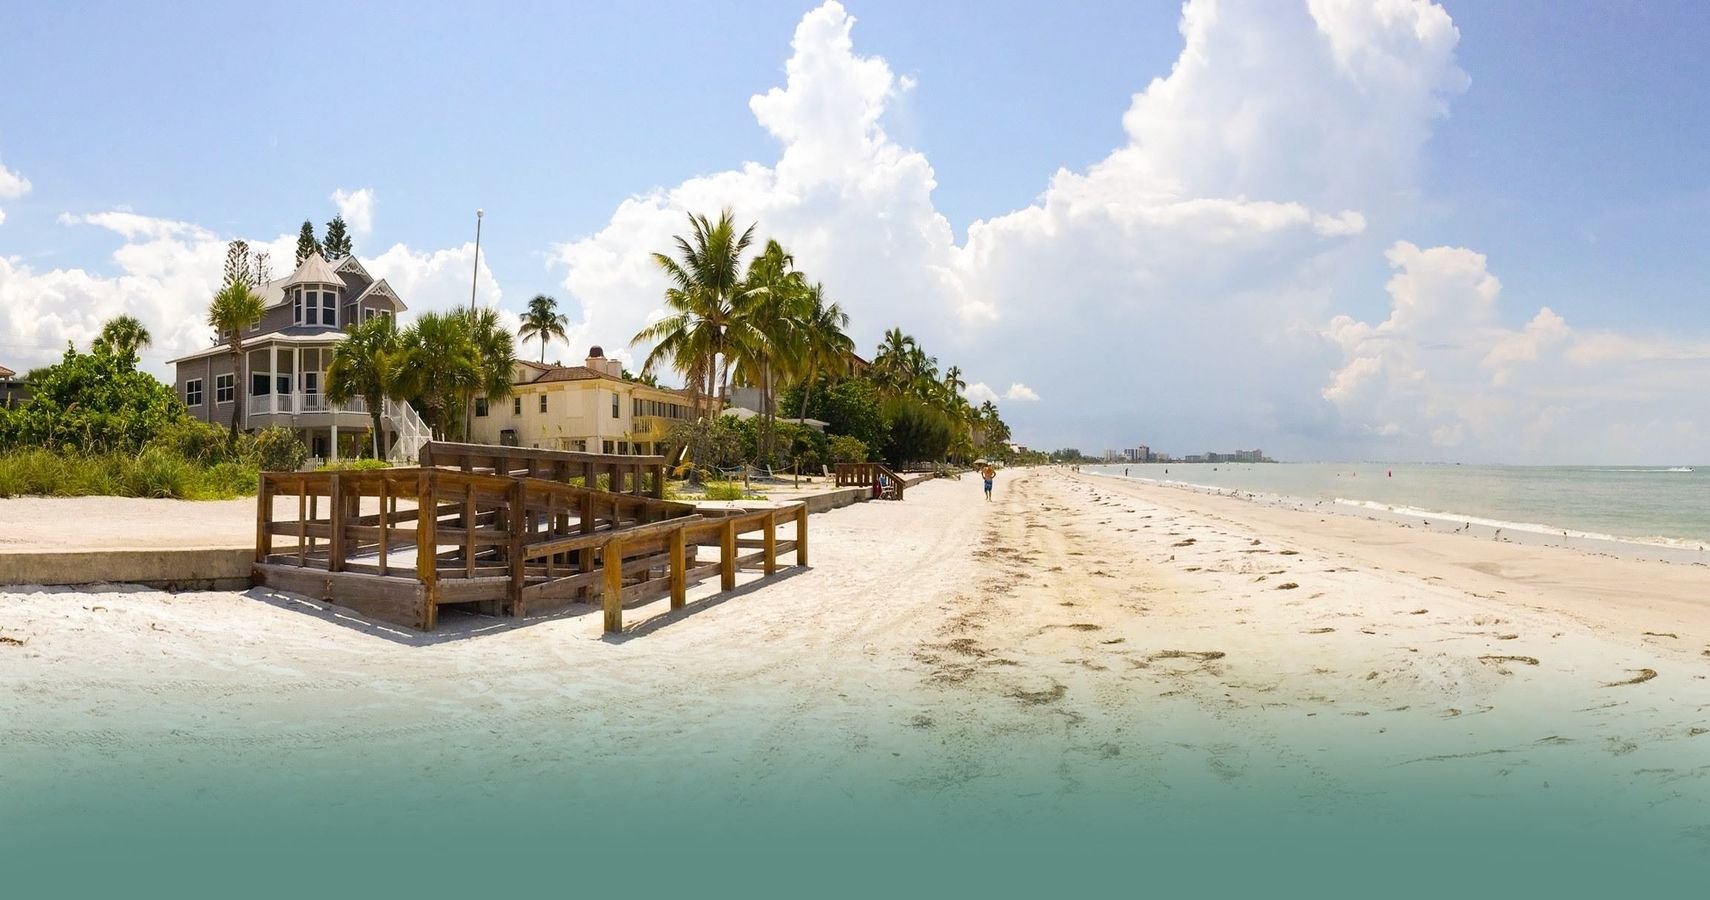 10 Beaches In Florida You’ve Never Heard Of